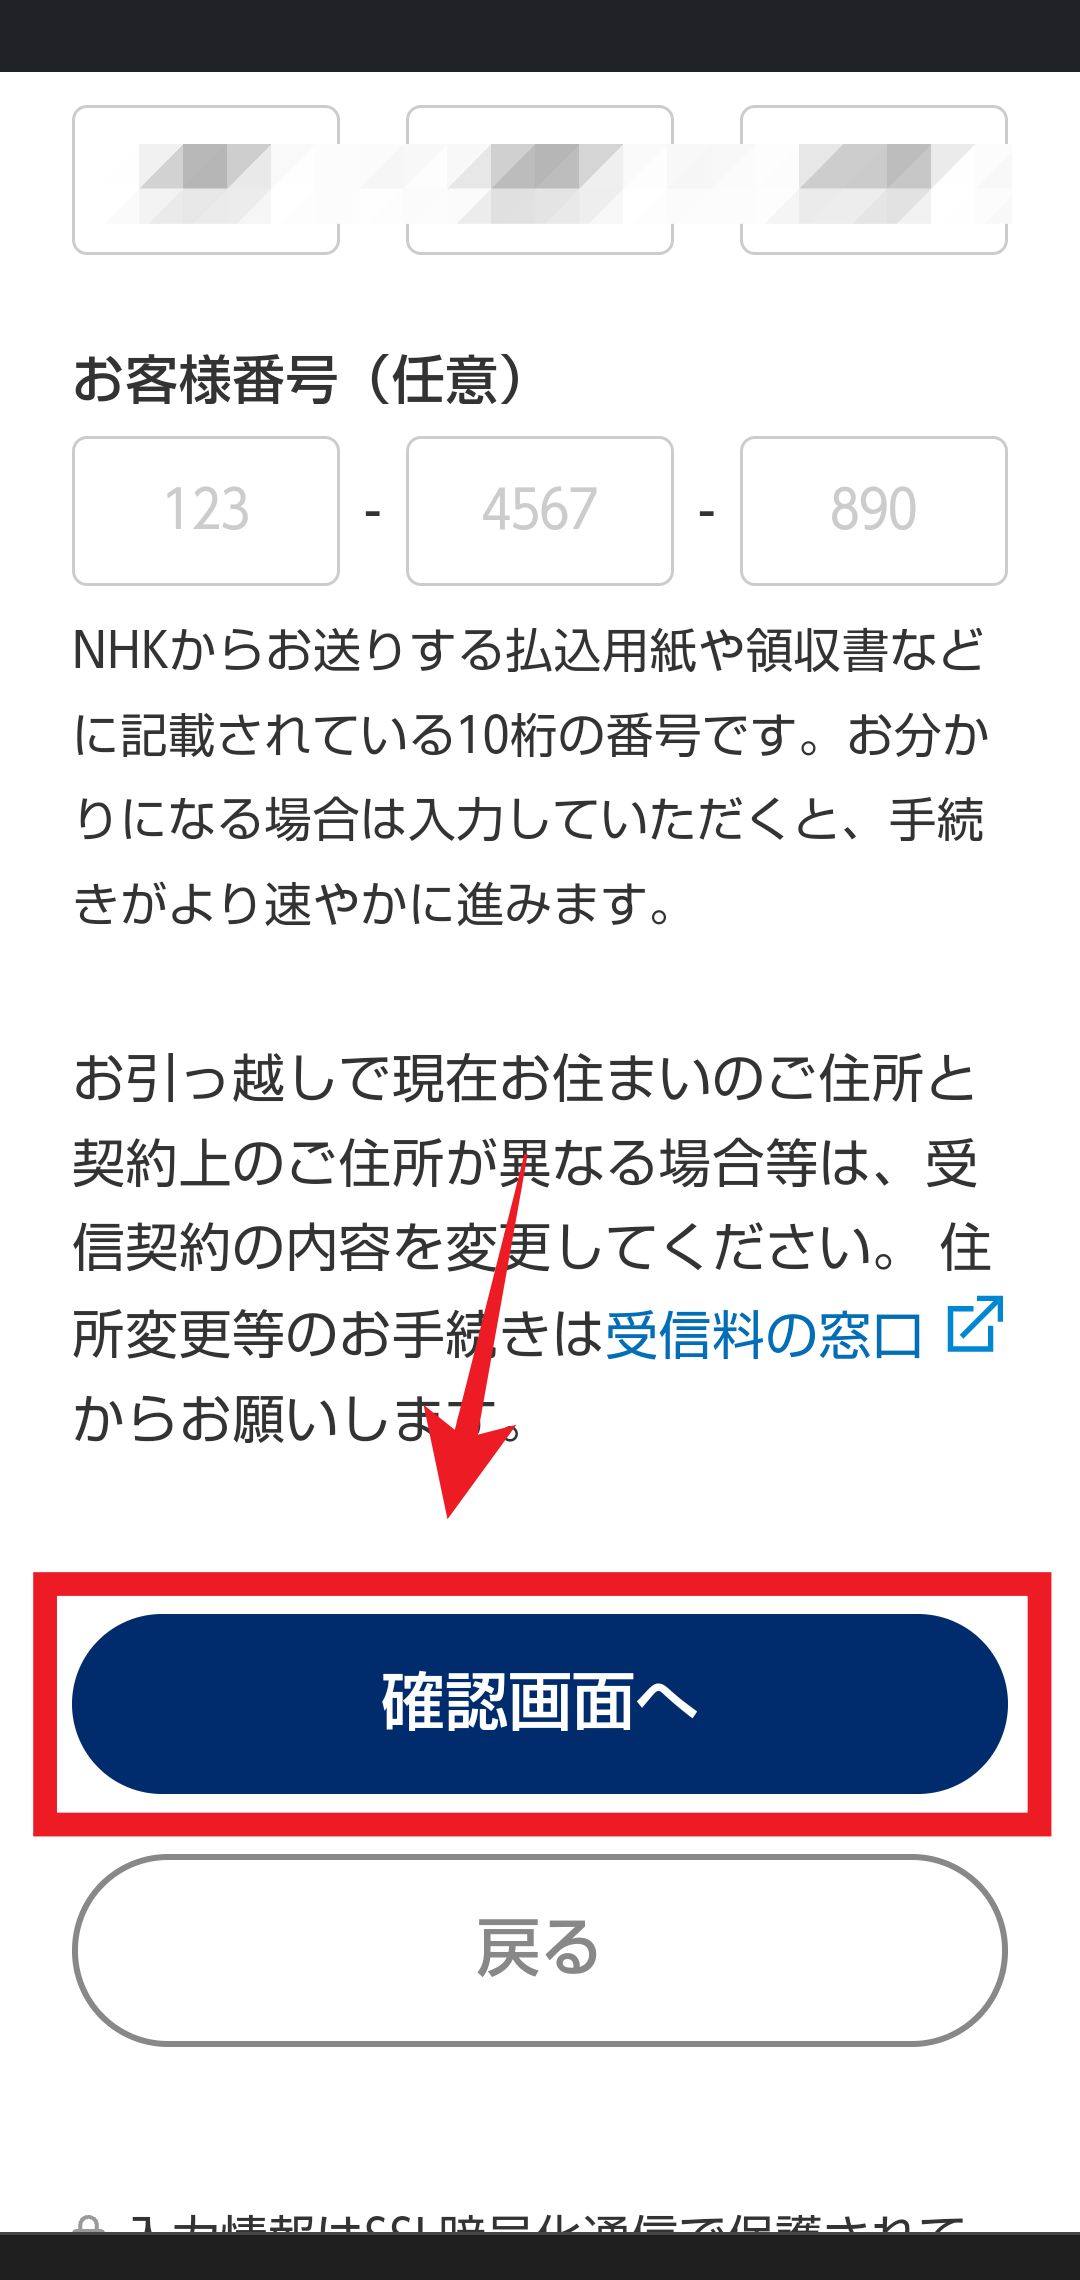 NHK登録画面１１